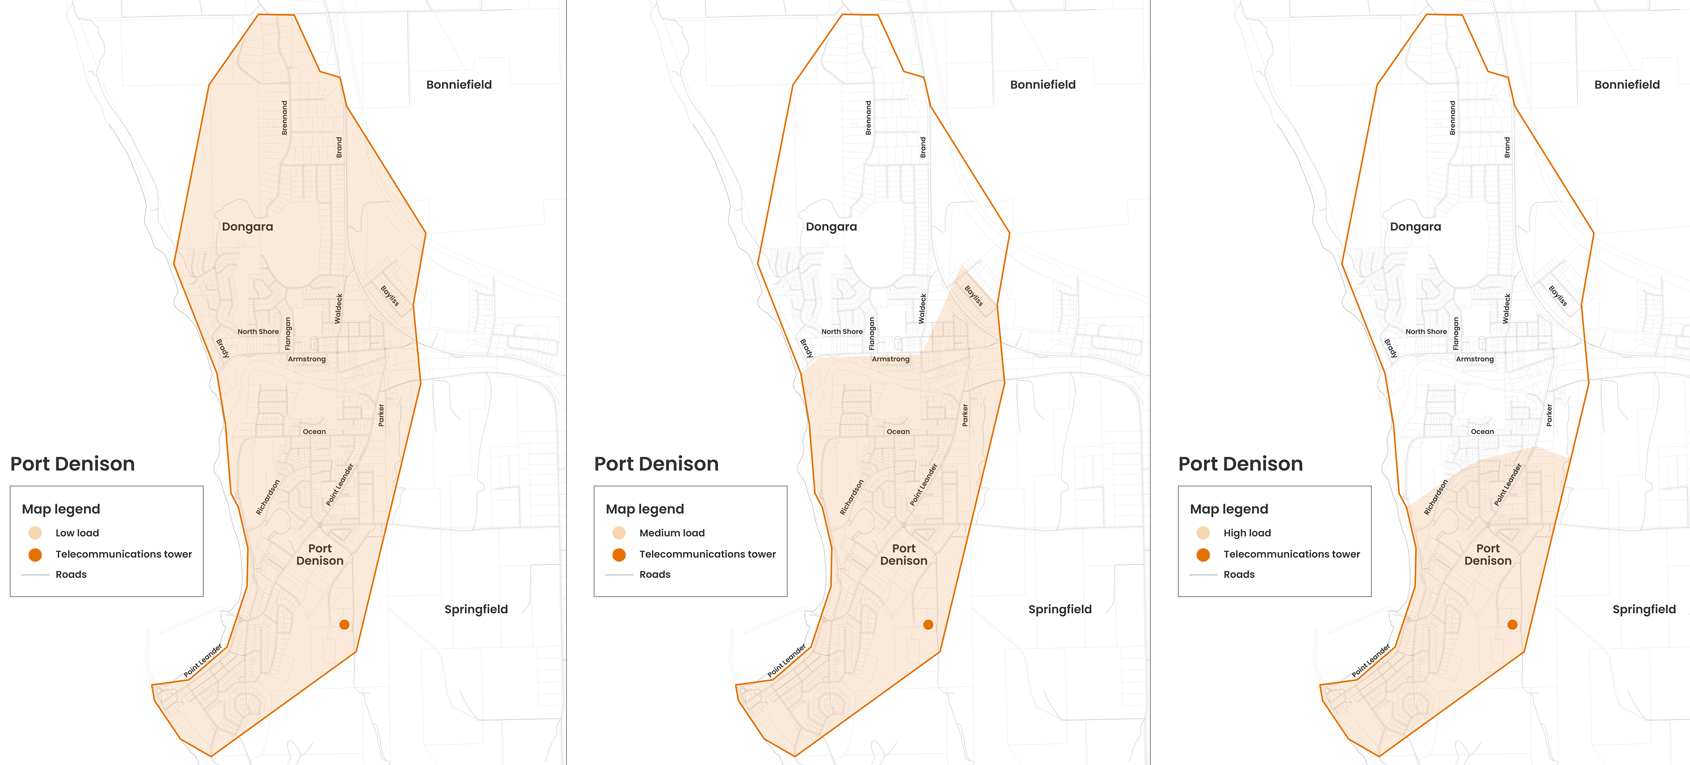 HVIU coverage maps in Port Denison